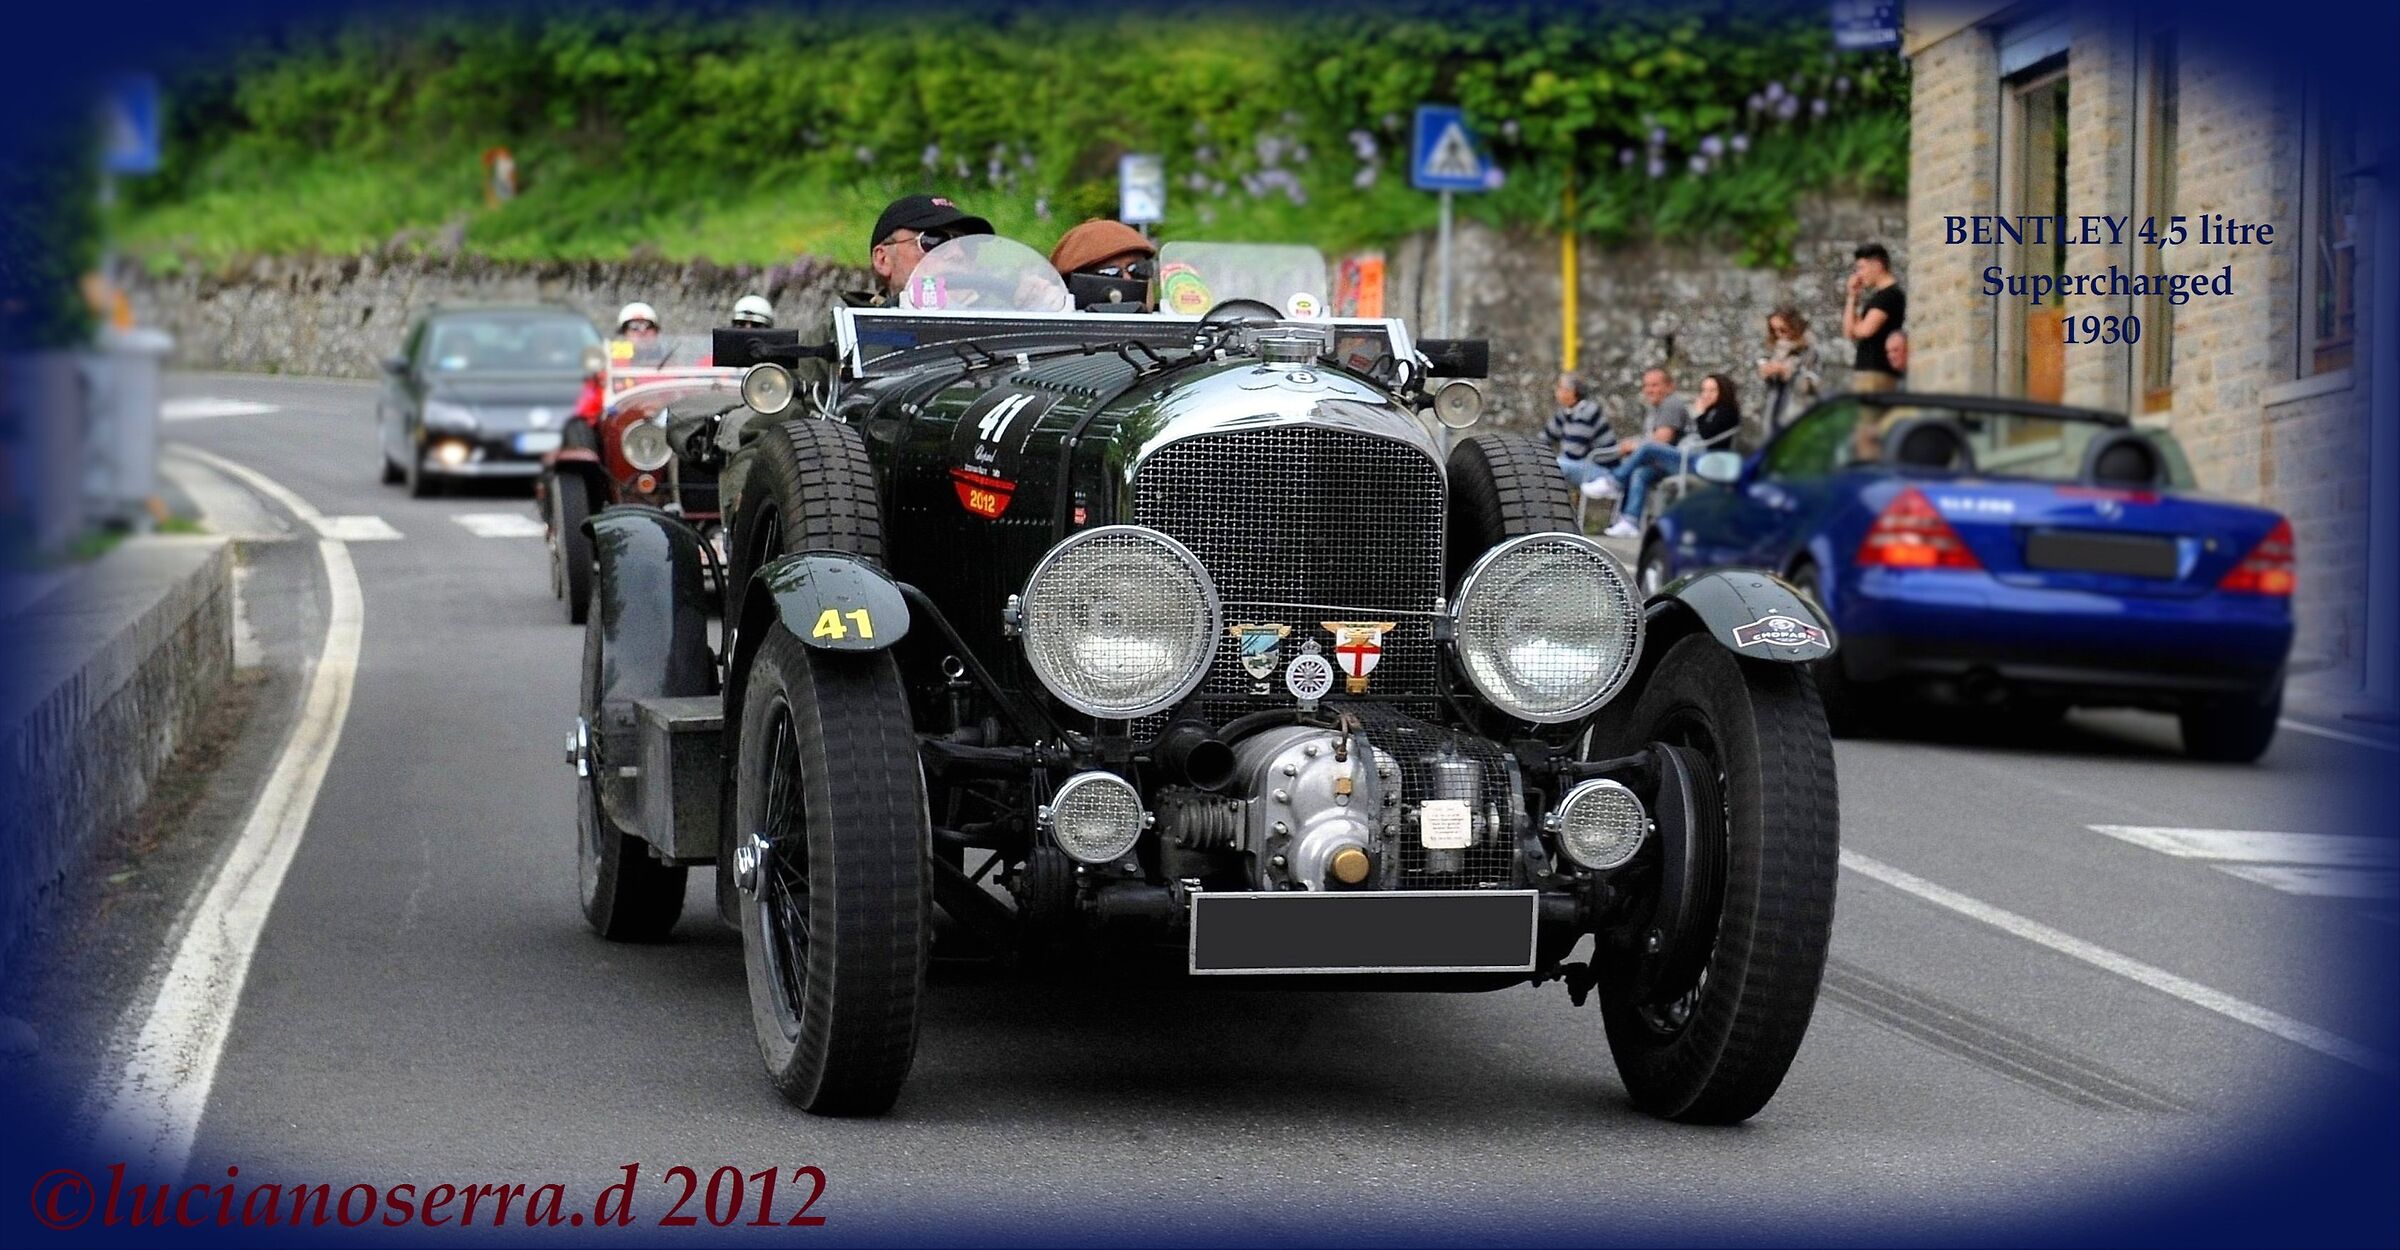 Bentley 4 1/2 Litre Supercharged-1930...